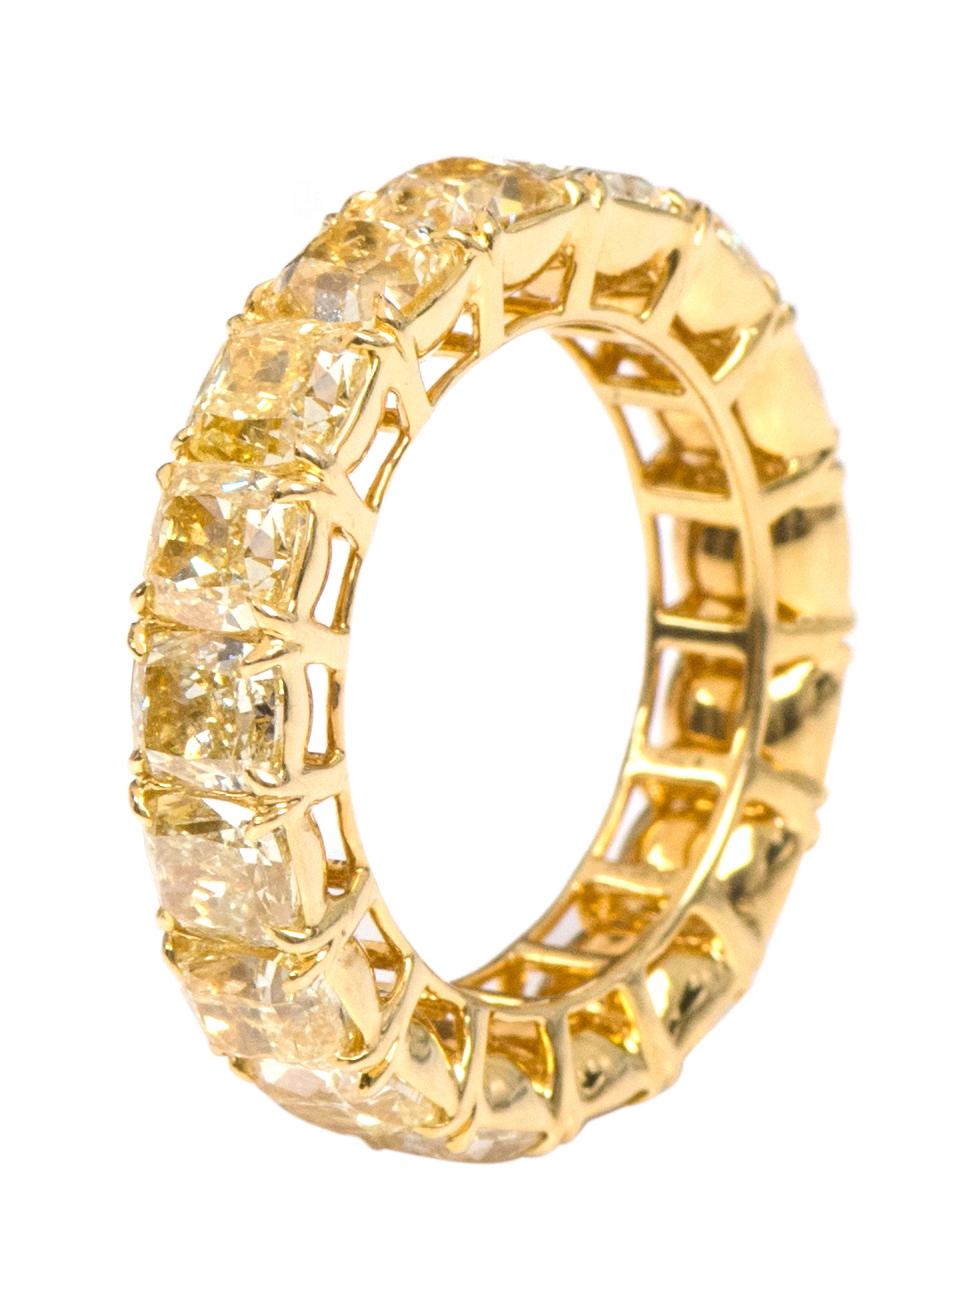 Cushion Cut 18 Karat Yellow Gold 10.01 Carat Solitaire Yellow Diamond Eternity Band Ring For Sale